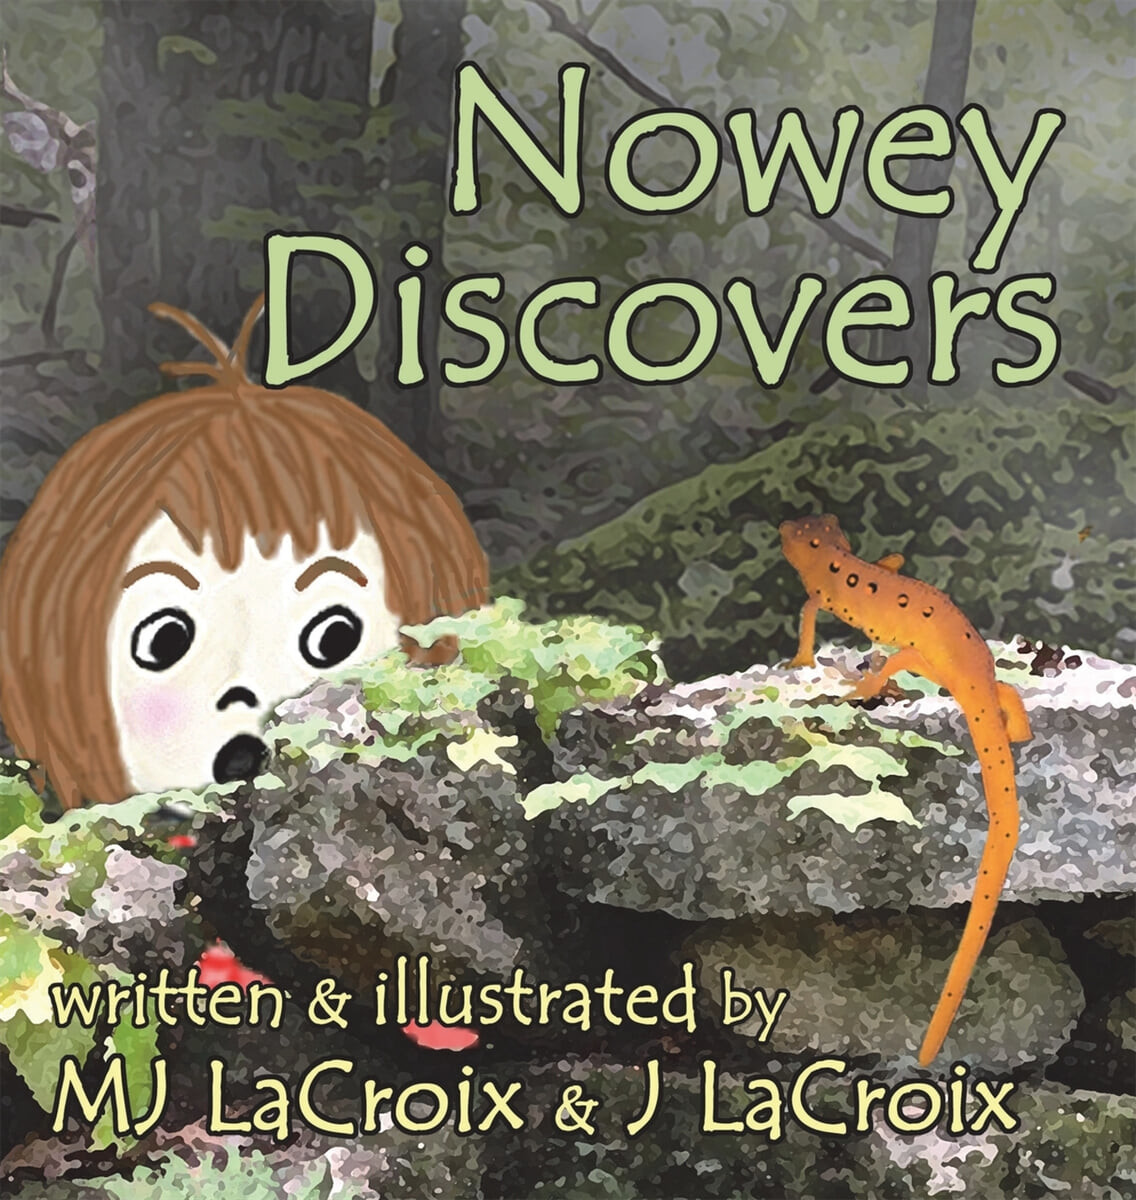 Nowey Discovers